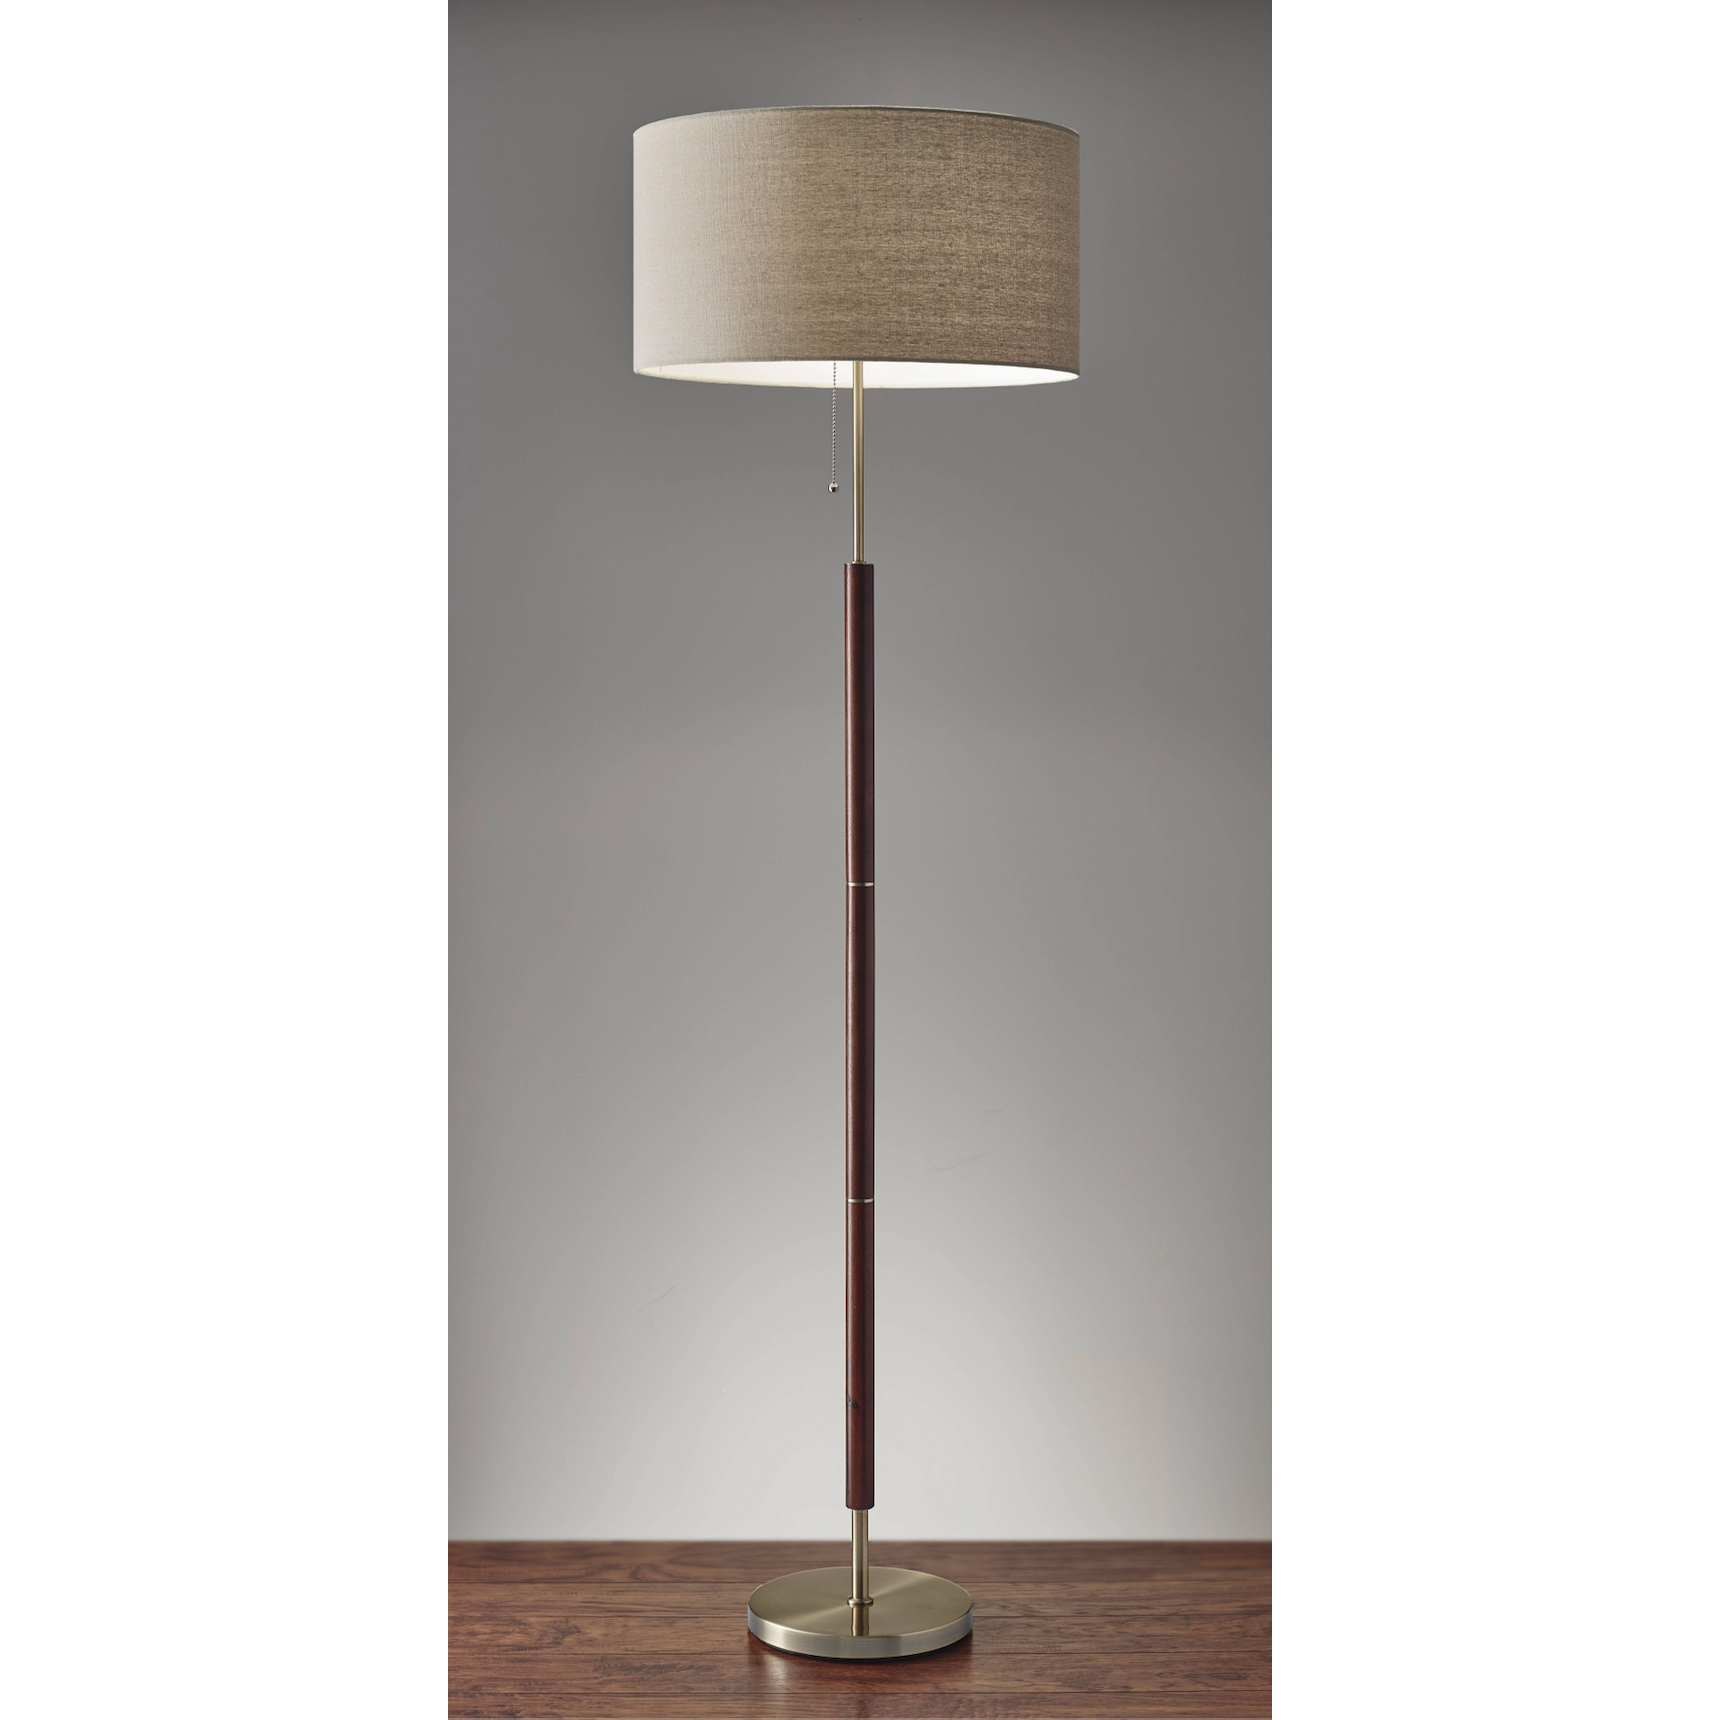 Hamilton Collection Floor Lamp